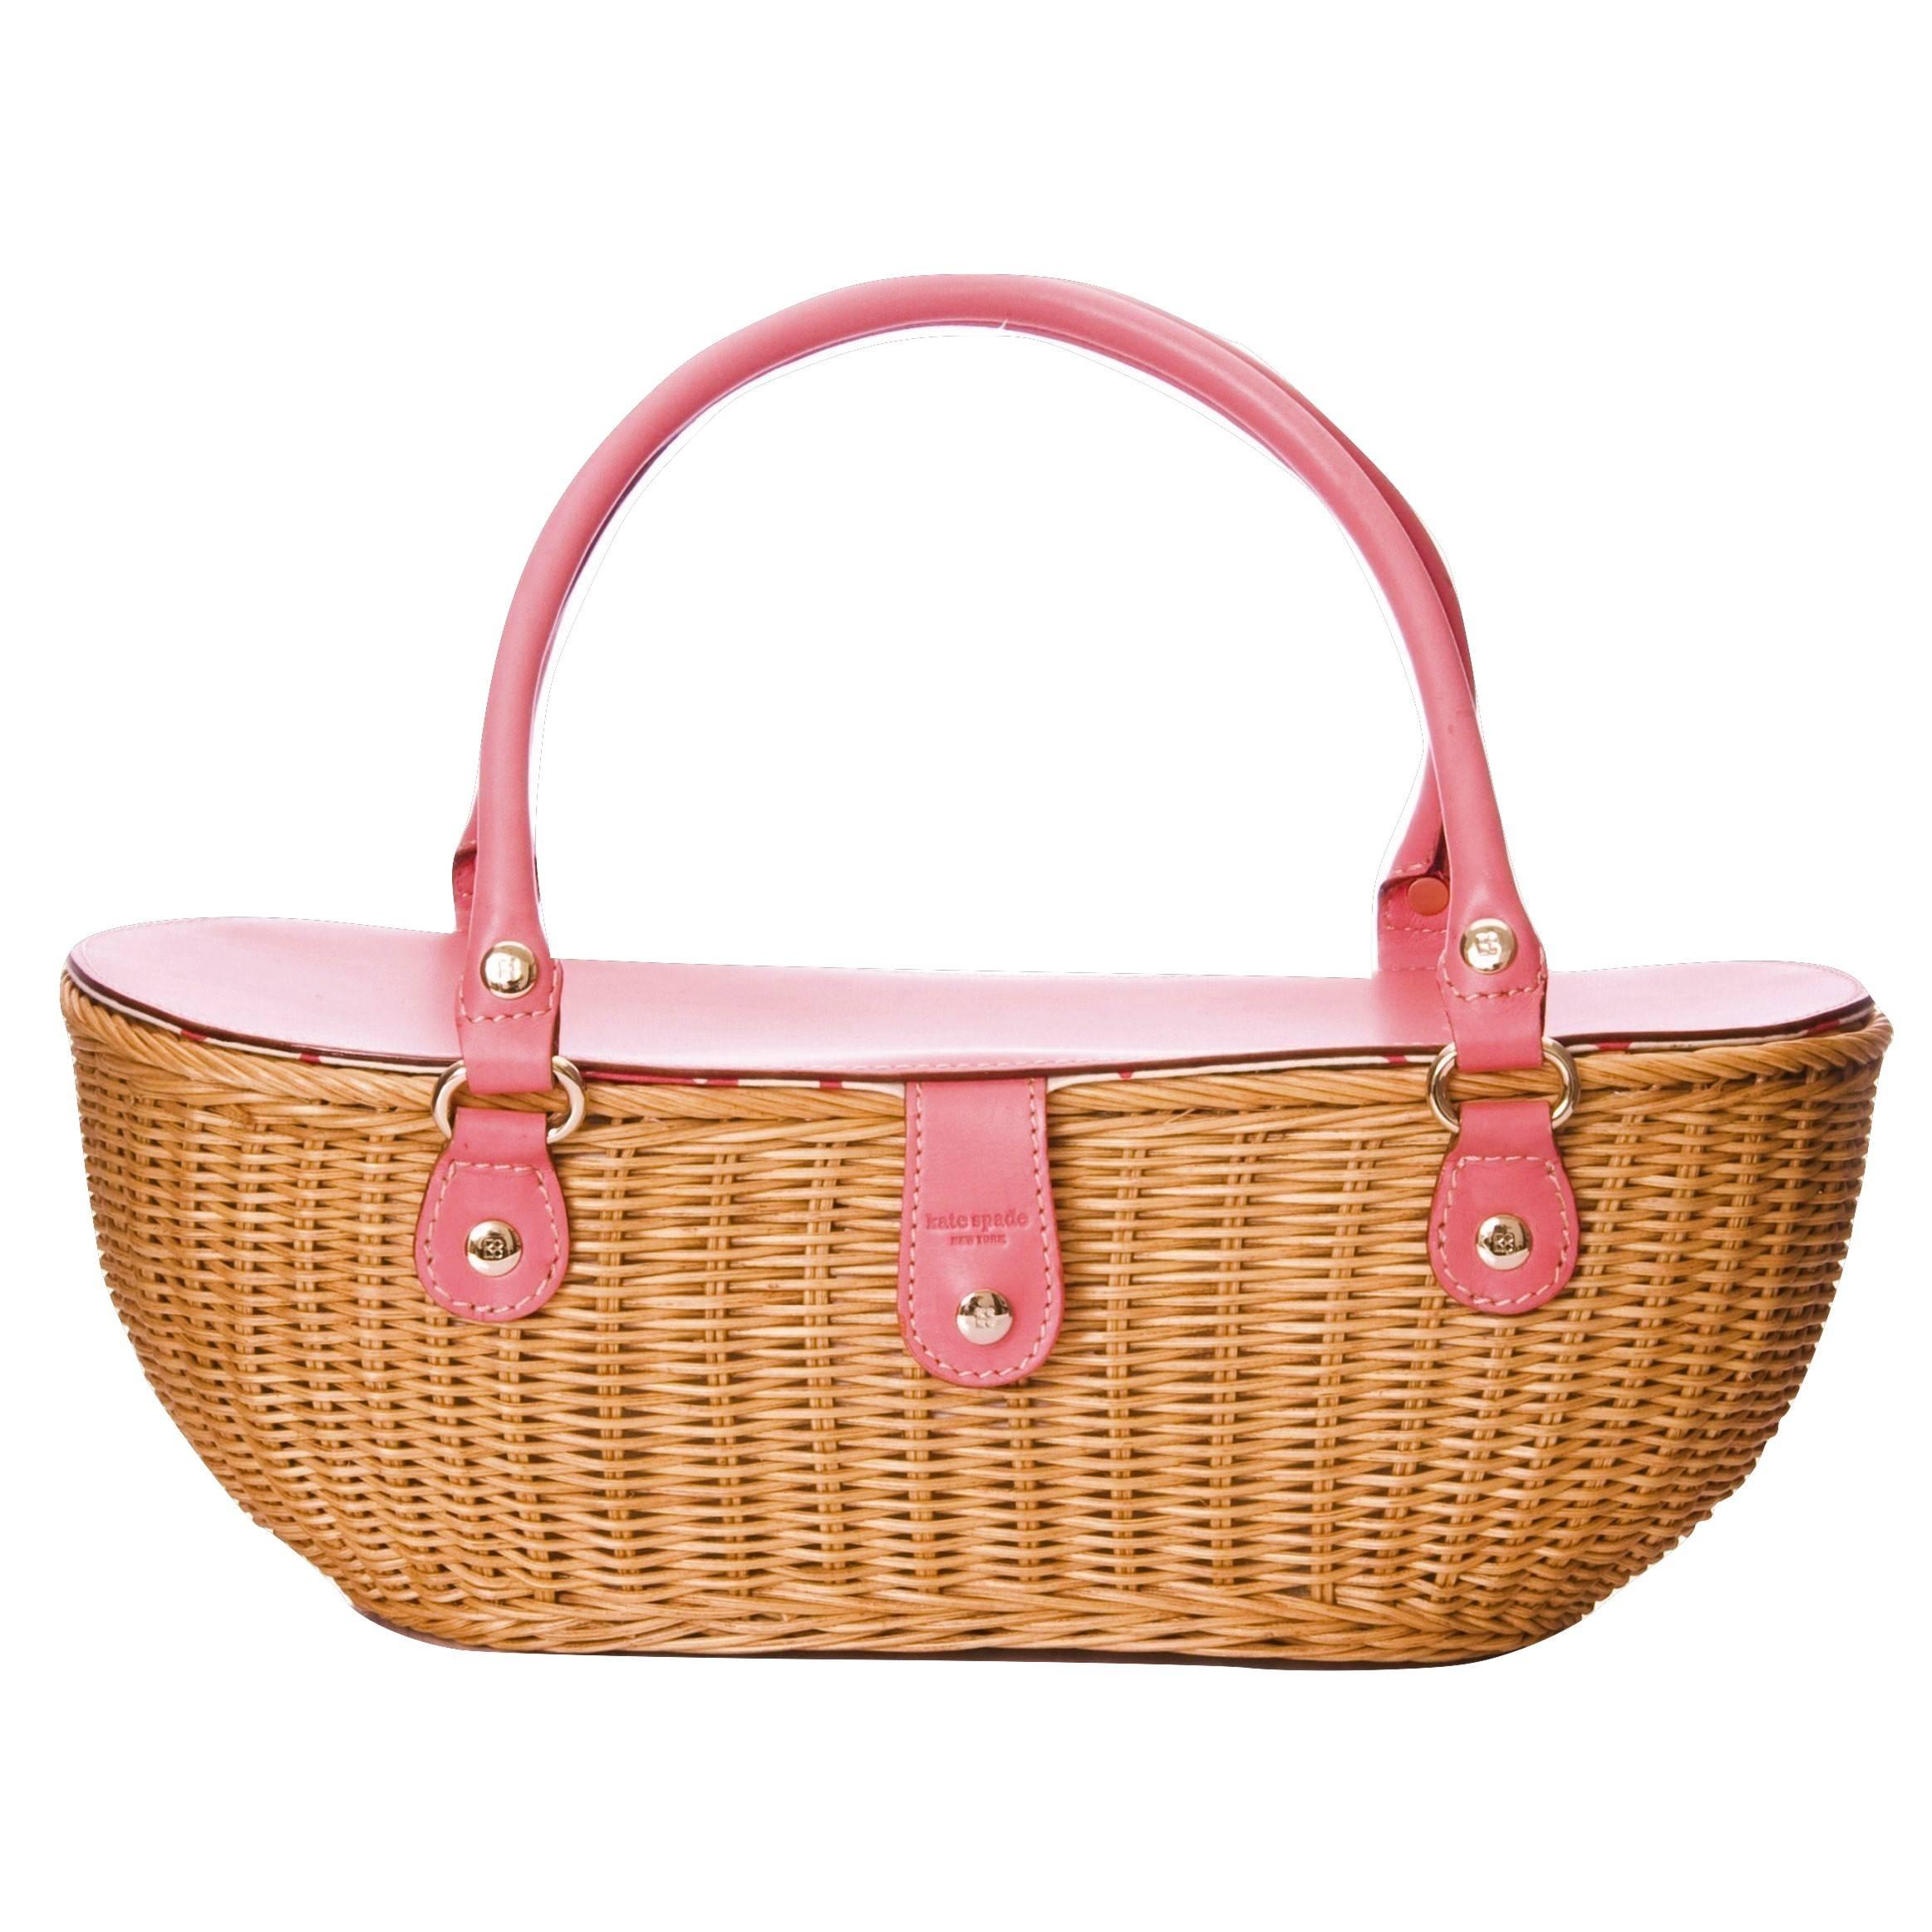 New Kate Spade Spring 2005 Collection Pink Wicker Basket Bag